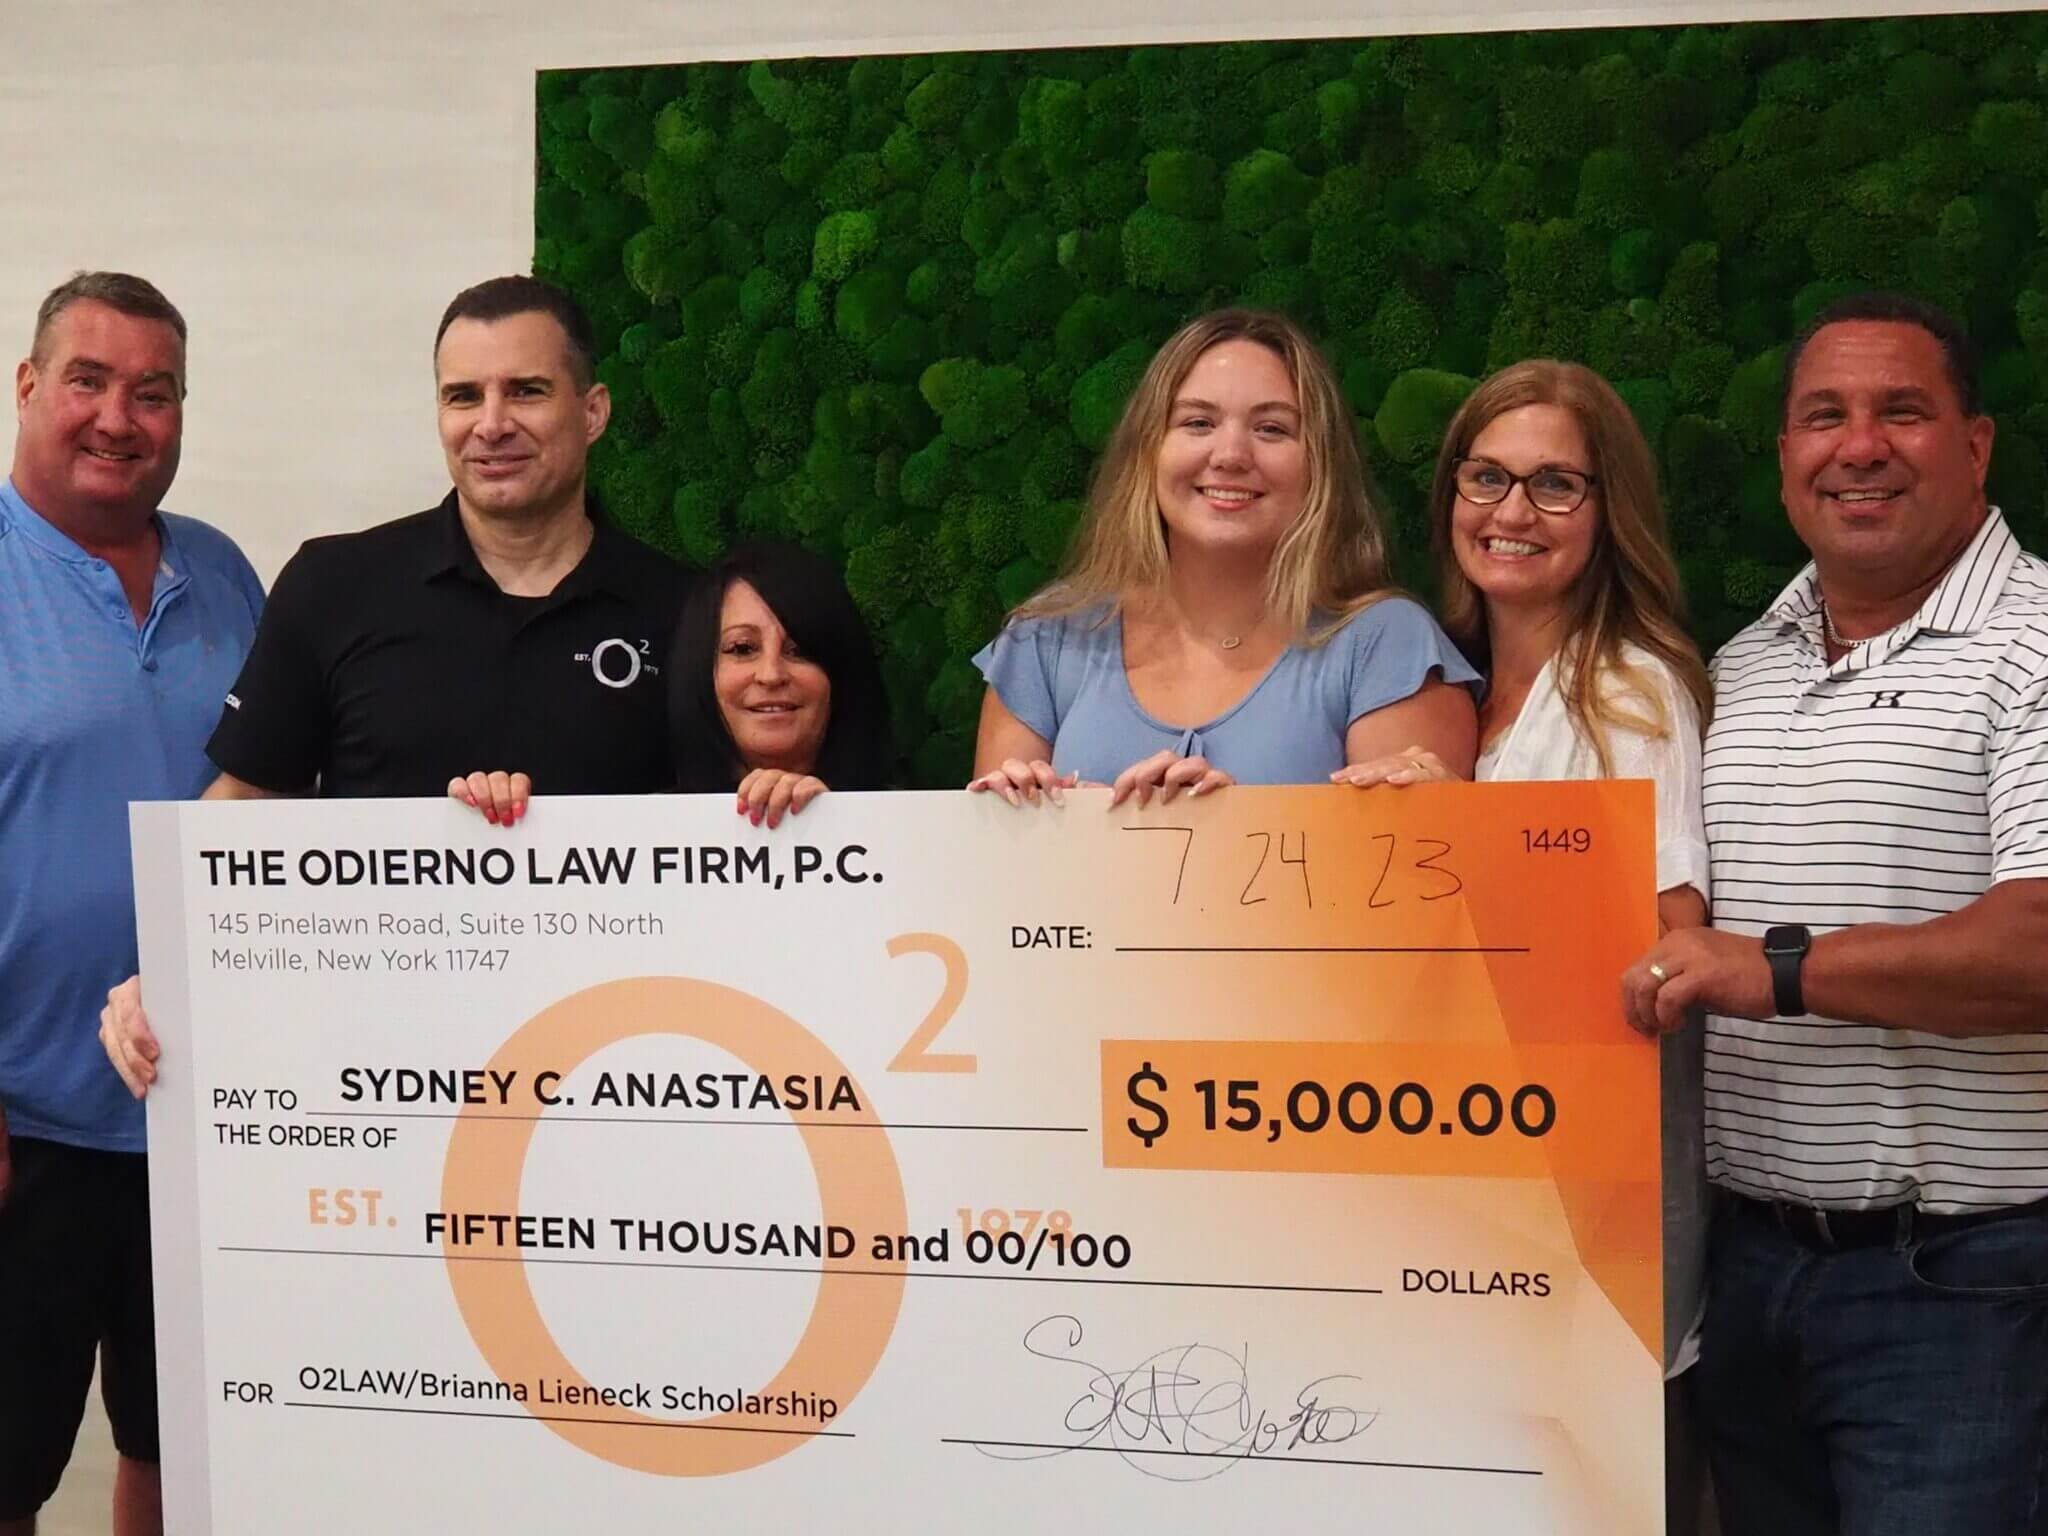 Cancer survivor Sydney Anastasia presented with the Brianna Lieneck Memorial Scholarship Award